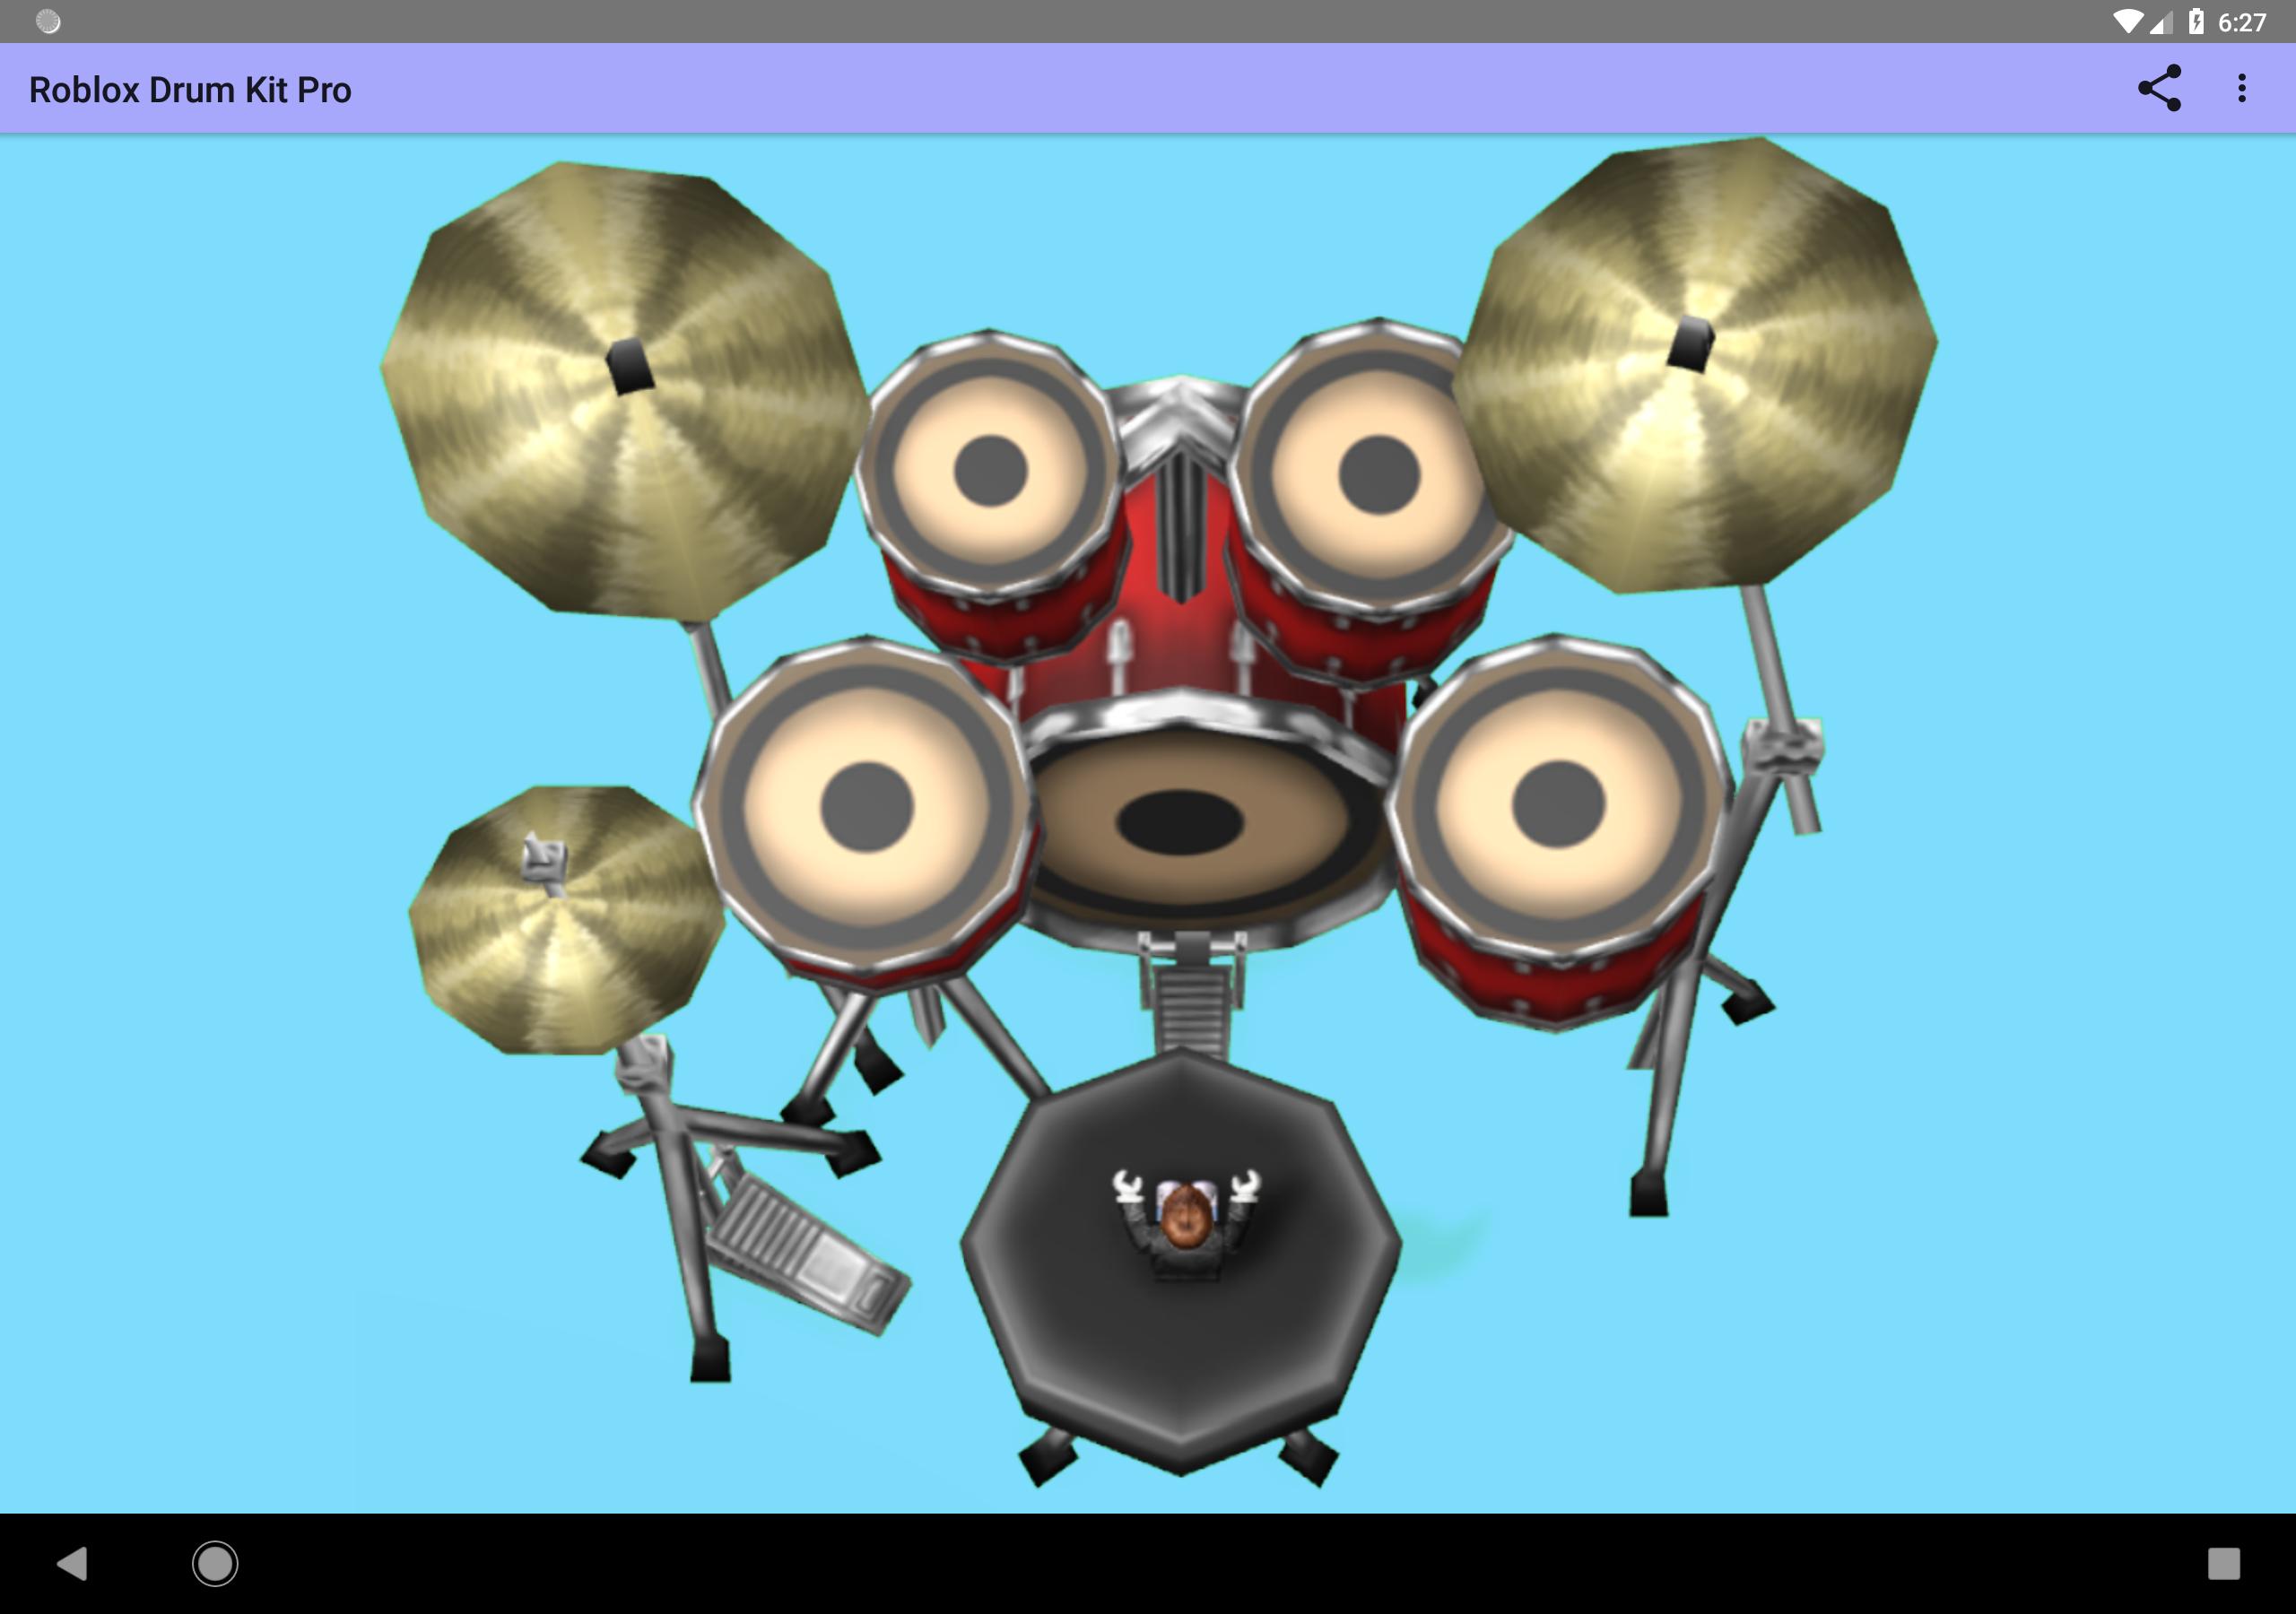 Pro Roblox Oof Drum Kit Death Sound Meme Drums For Android Apk Download - roblox meme death sound